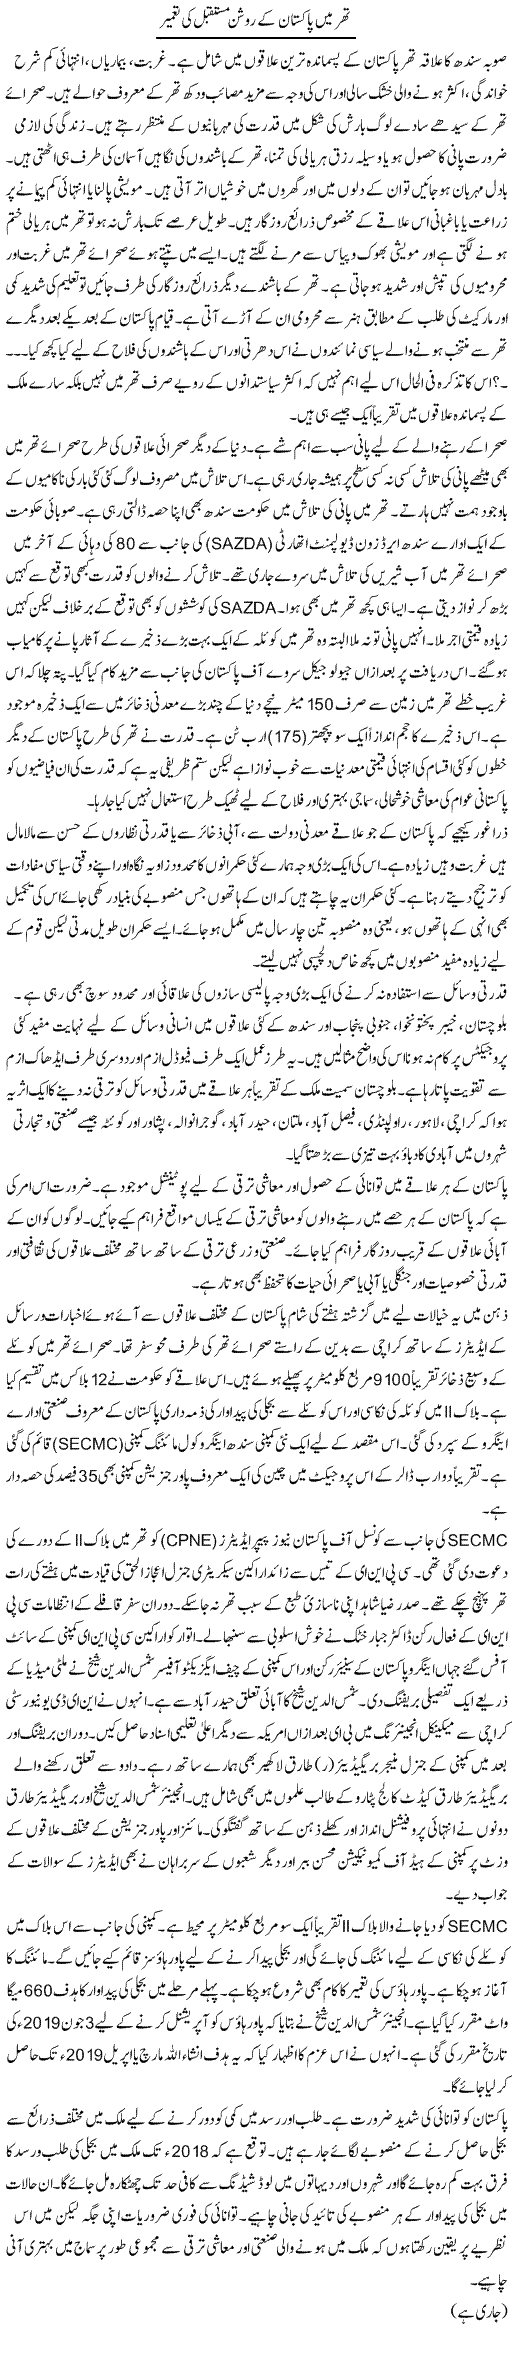 Thar Mein Pakistan Ke Roshan Mustaqbil Ki Taameer | Dr. Waqar Yousuf Azeemi | Daily Urdu Columns